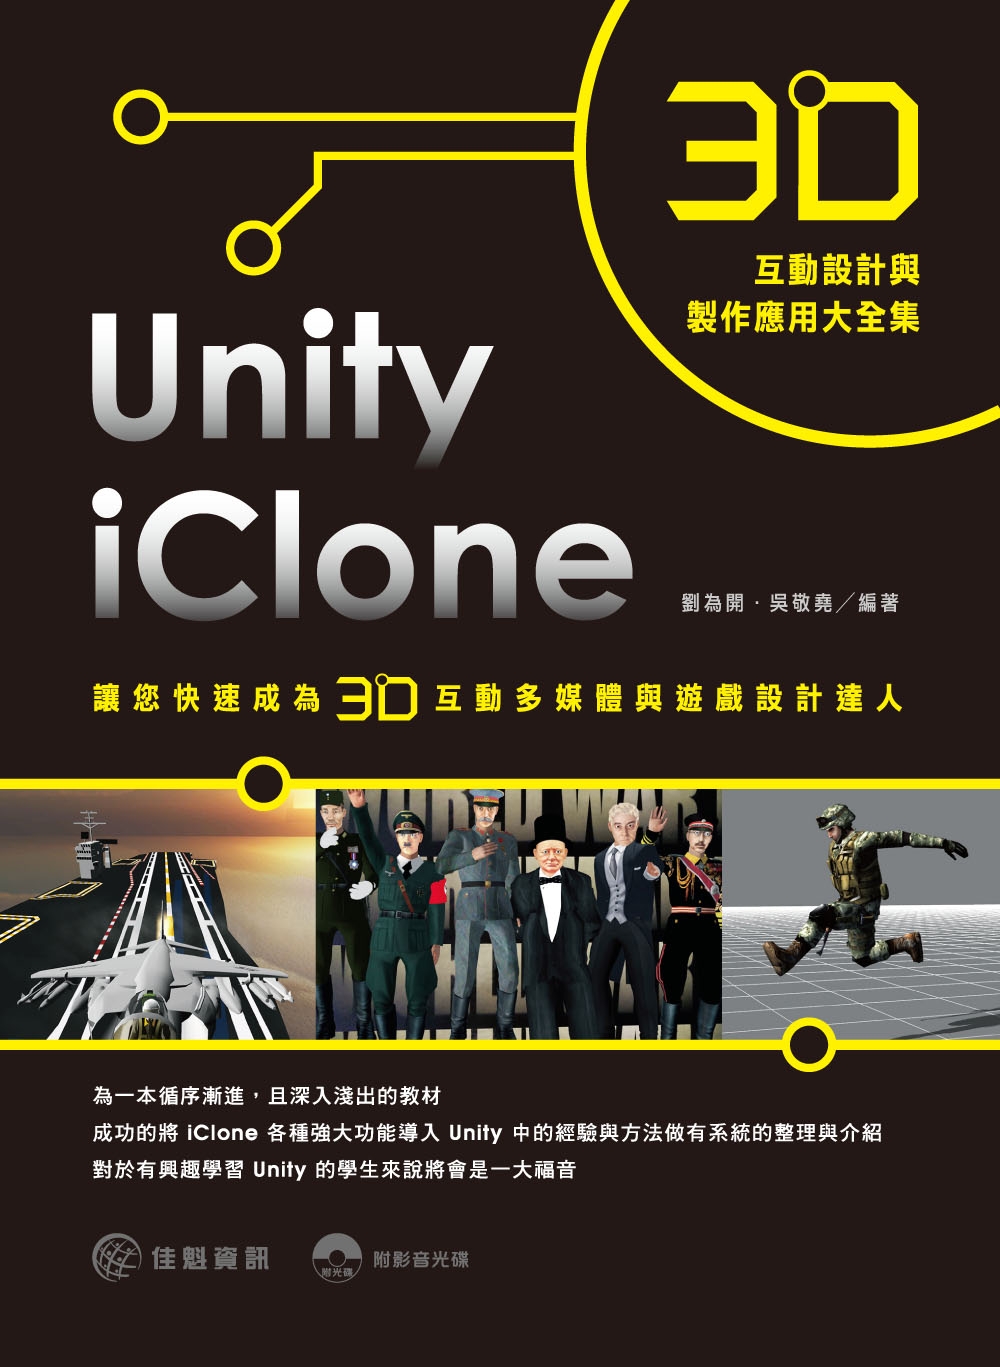 3D互動設計與製作應用大全集：iClone + Unity讓您快速成為3D互動多媒體與遊戲設計達人